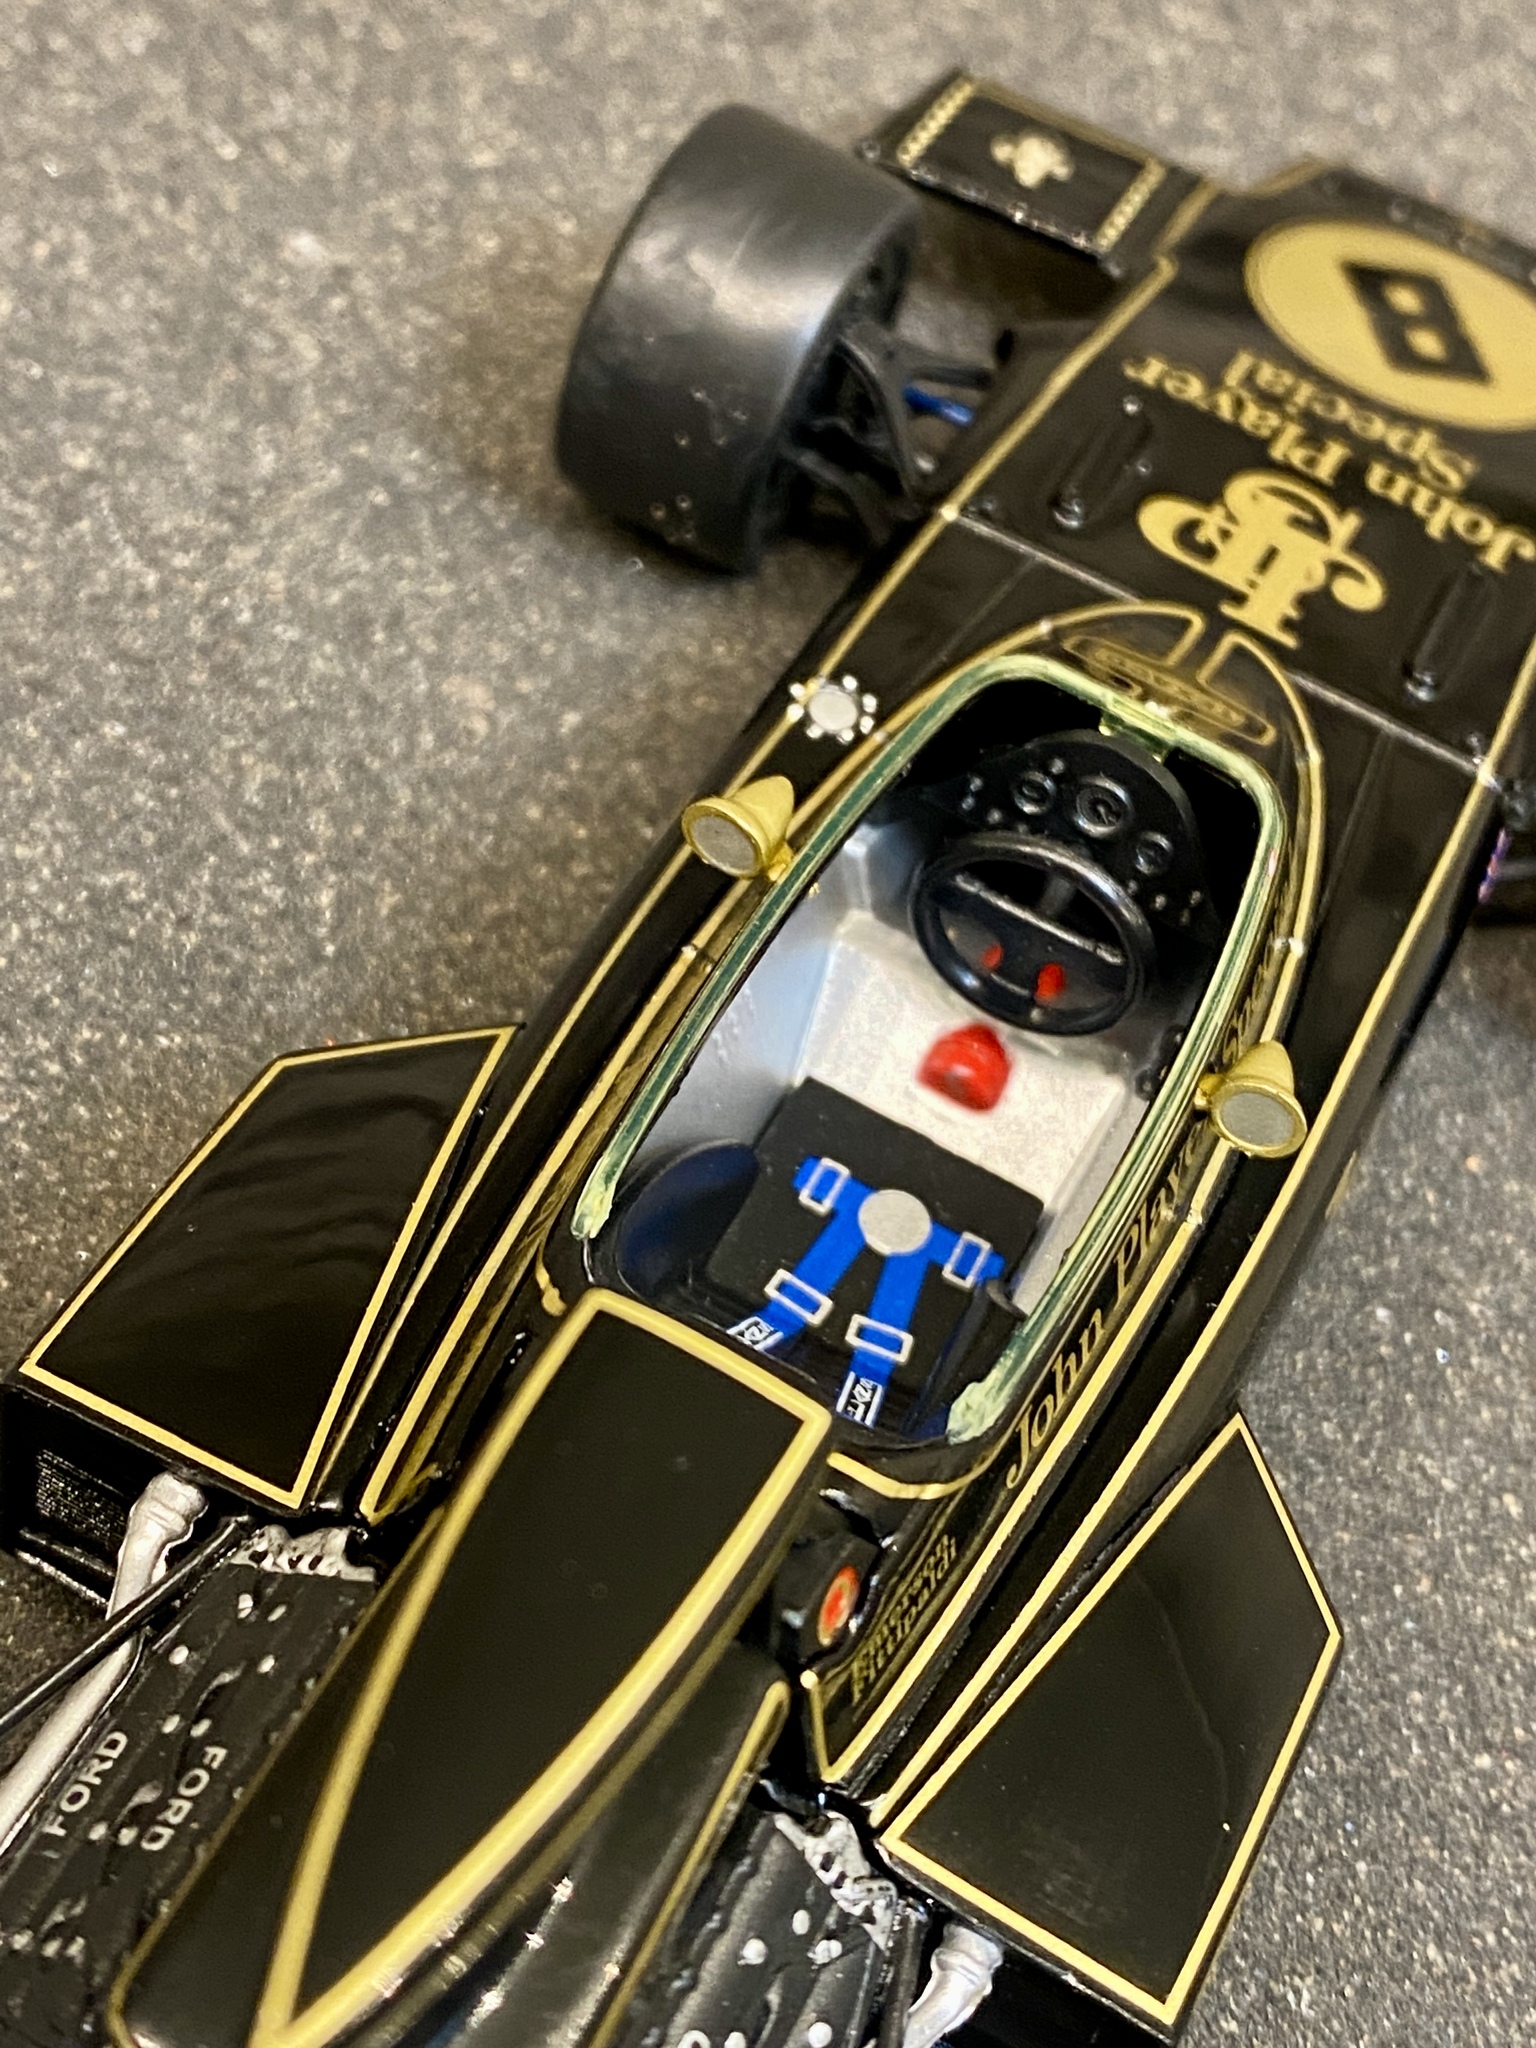 Skala 1/24 Lotus 72D, No.8, formula 1, GP Great Britain E.Fittipaldi fr IXO Models